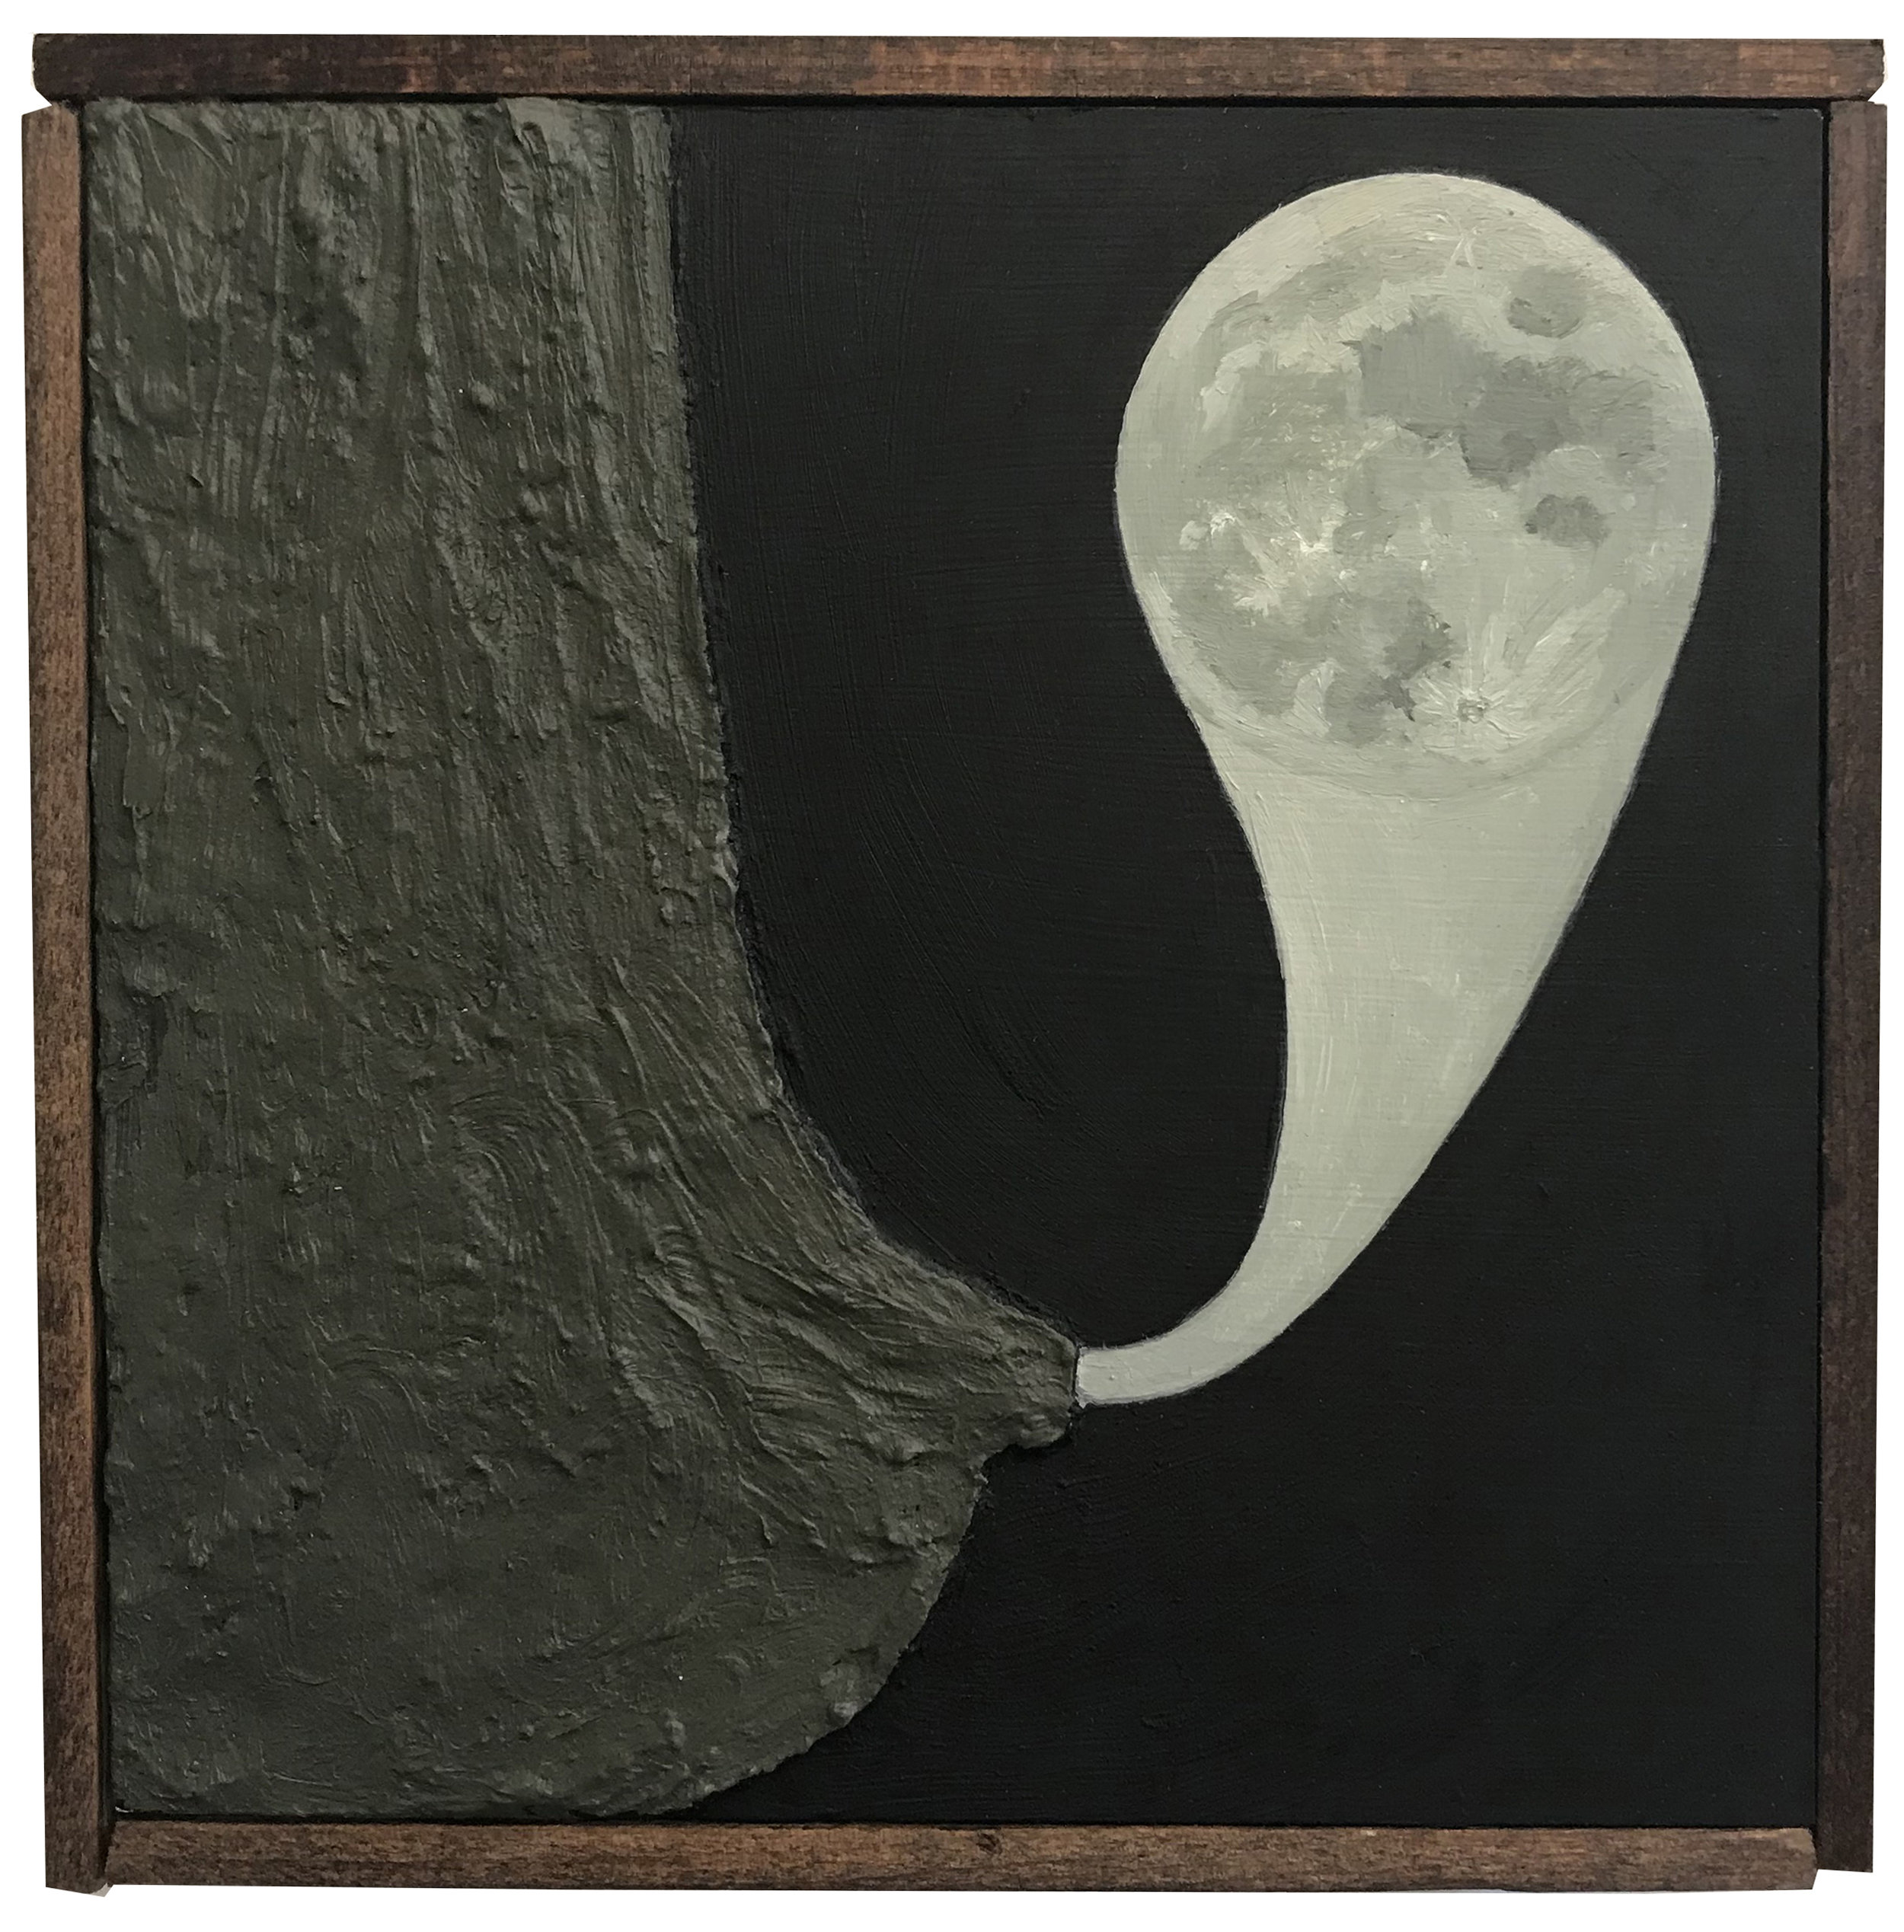   Moon Boob , 2017 Oil on board, wood frame 6.5 x 6.5 in 